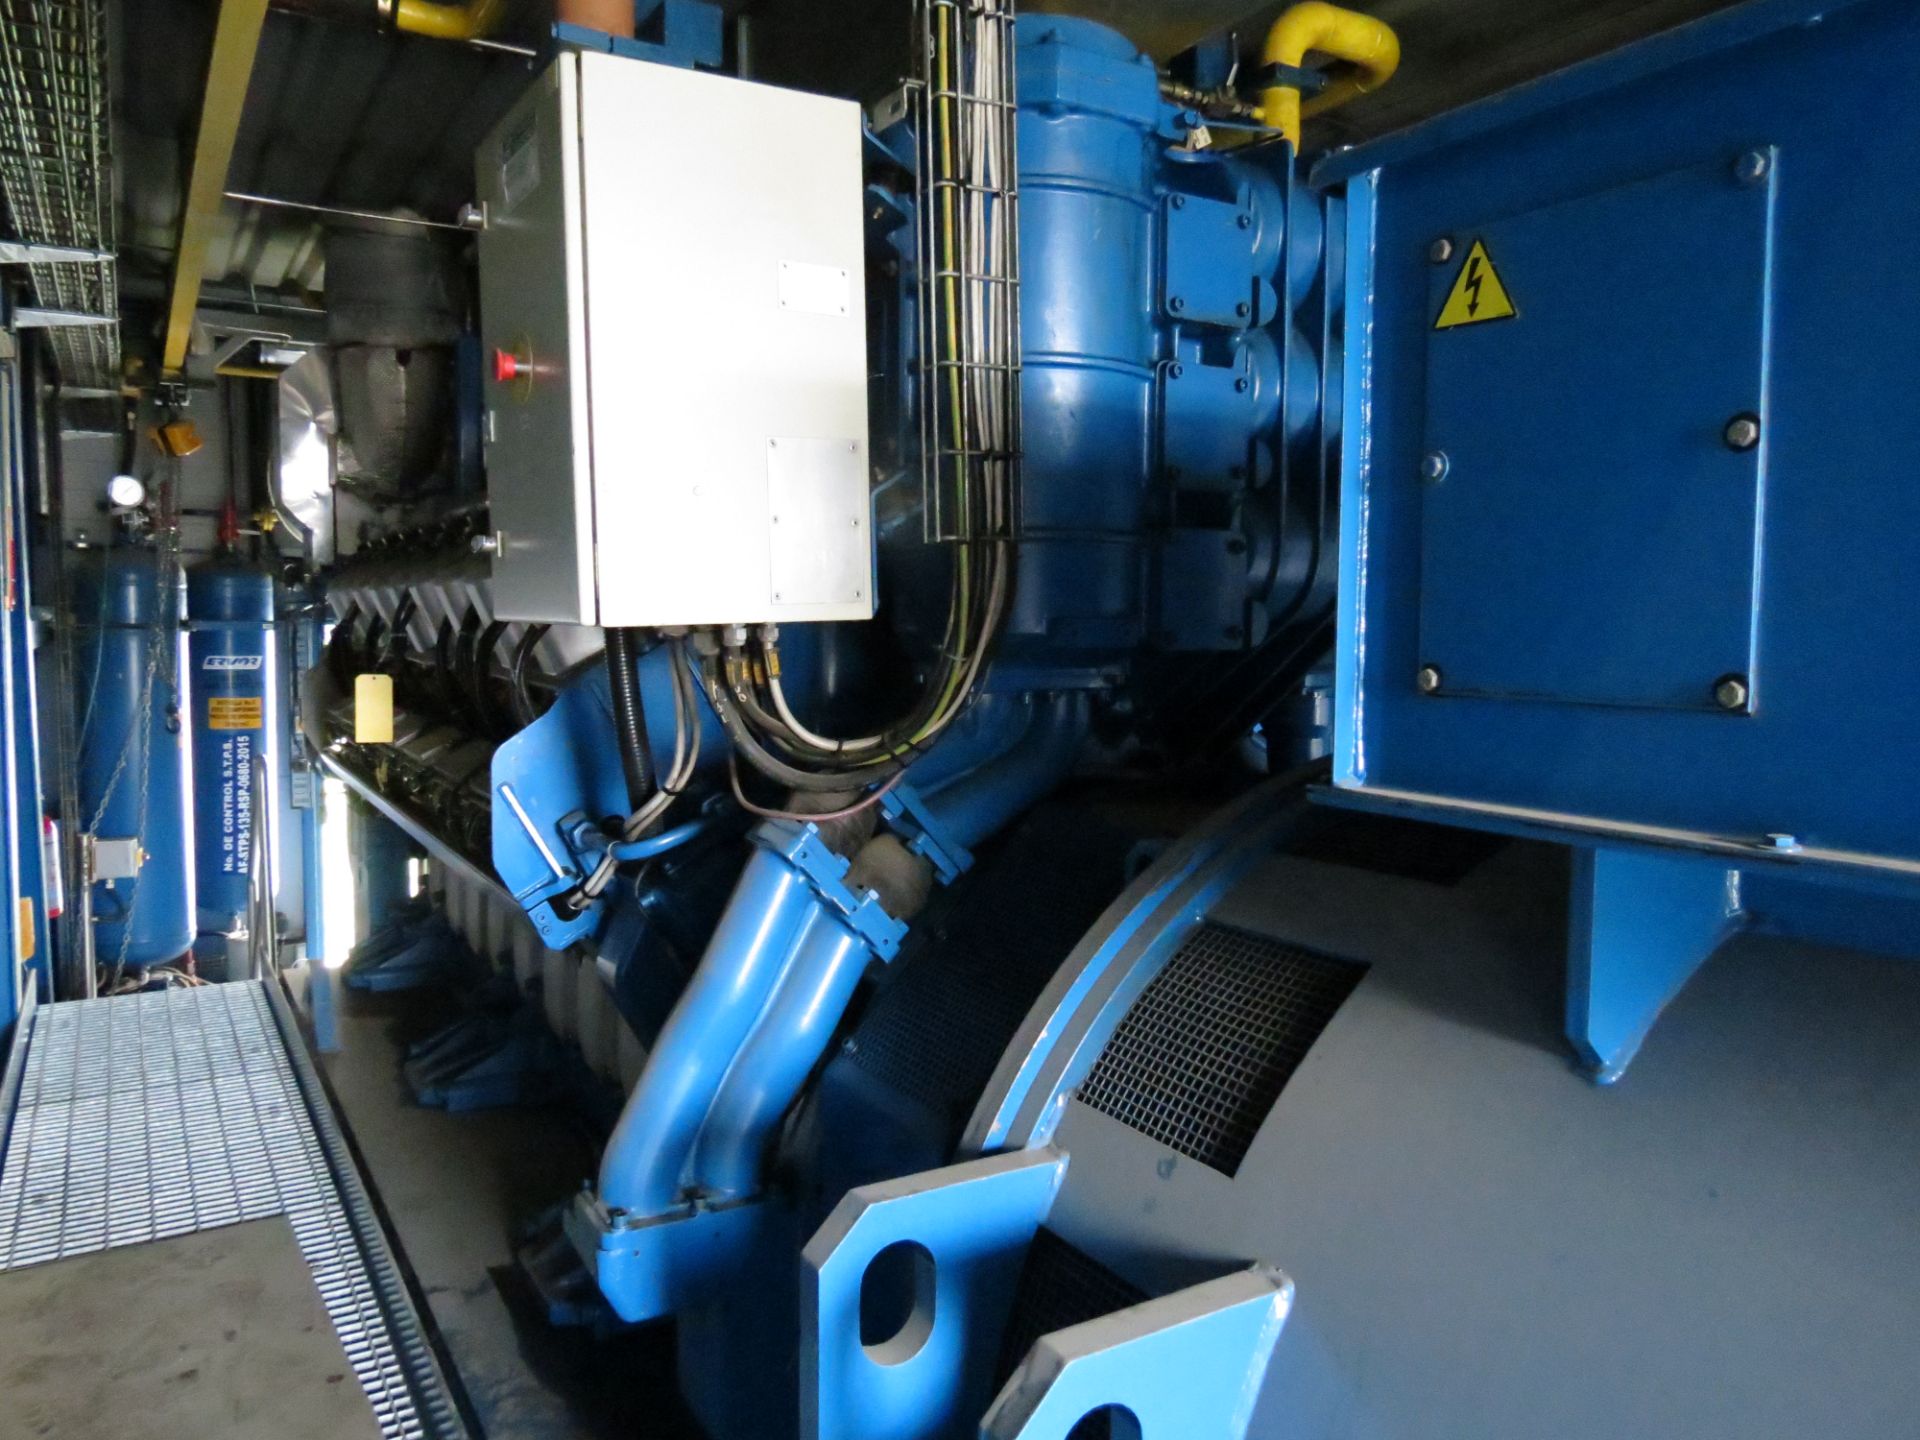 2001 Leroy Somer Emergency plant 18-cylinder Generator model LSA 56 L6-6P of 2840 KW/ 3550KVA - Image 3 of 73